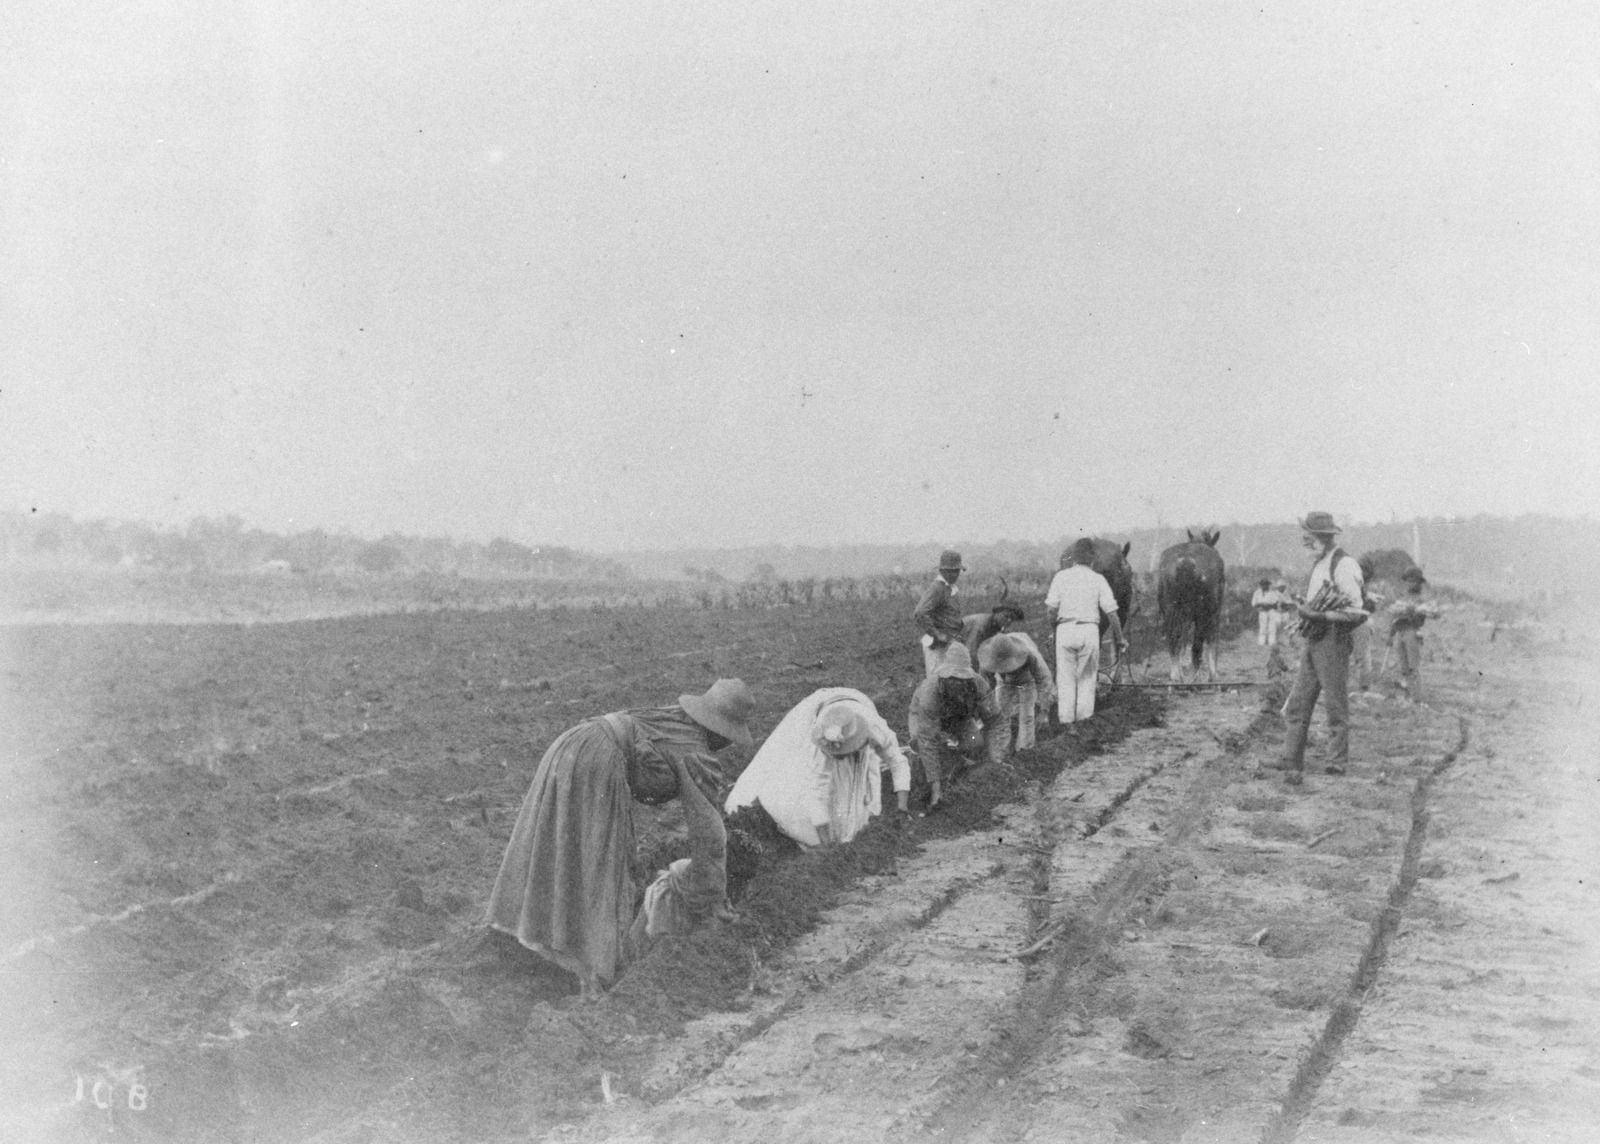 Australian South Sea Islanders planting sugar cane on a plantation